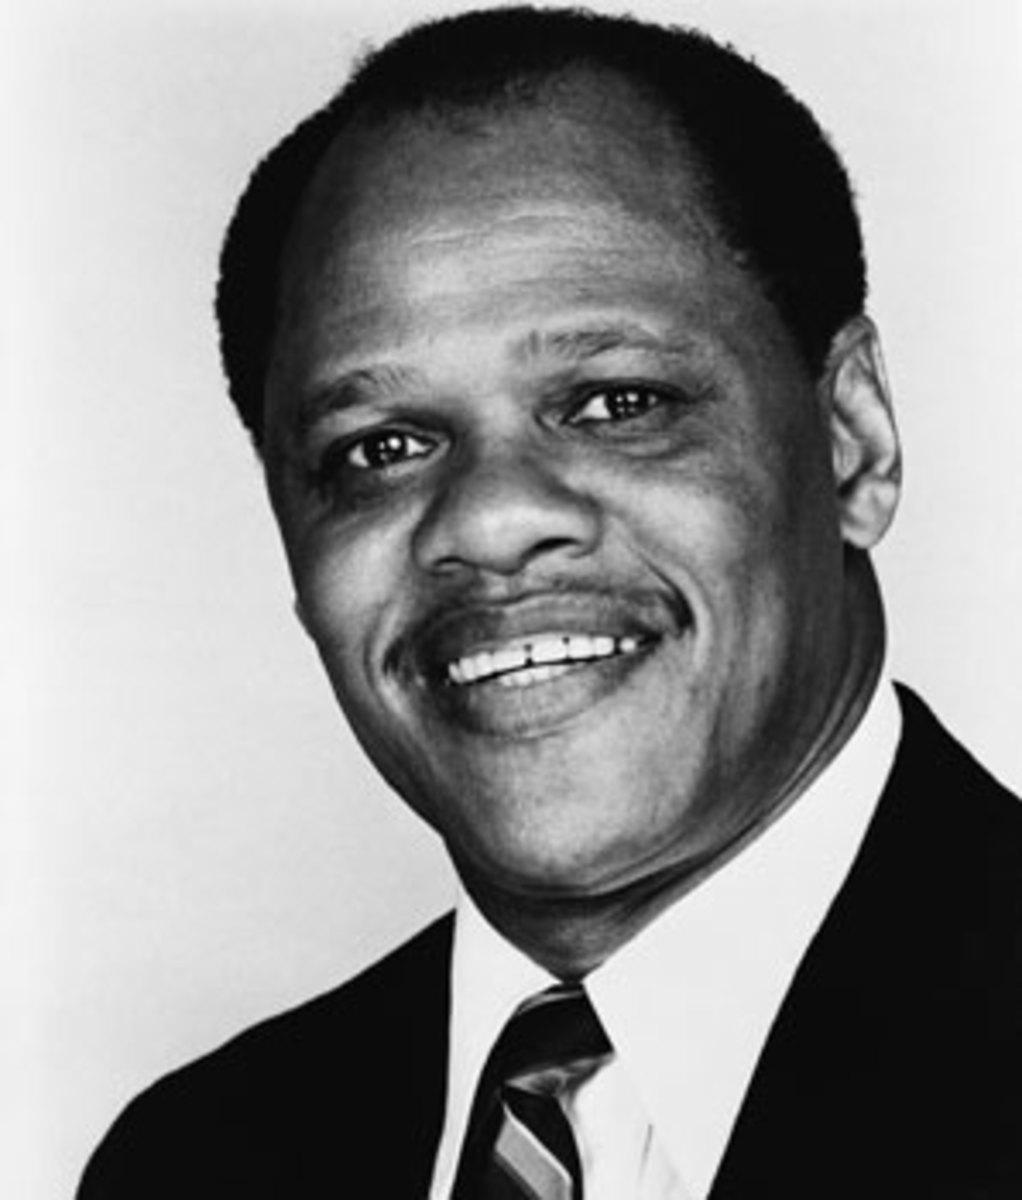 Campbell, 1st black Olympic decathlon winner, dies - Sports Illustrated